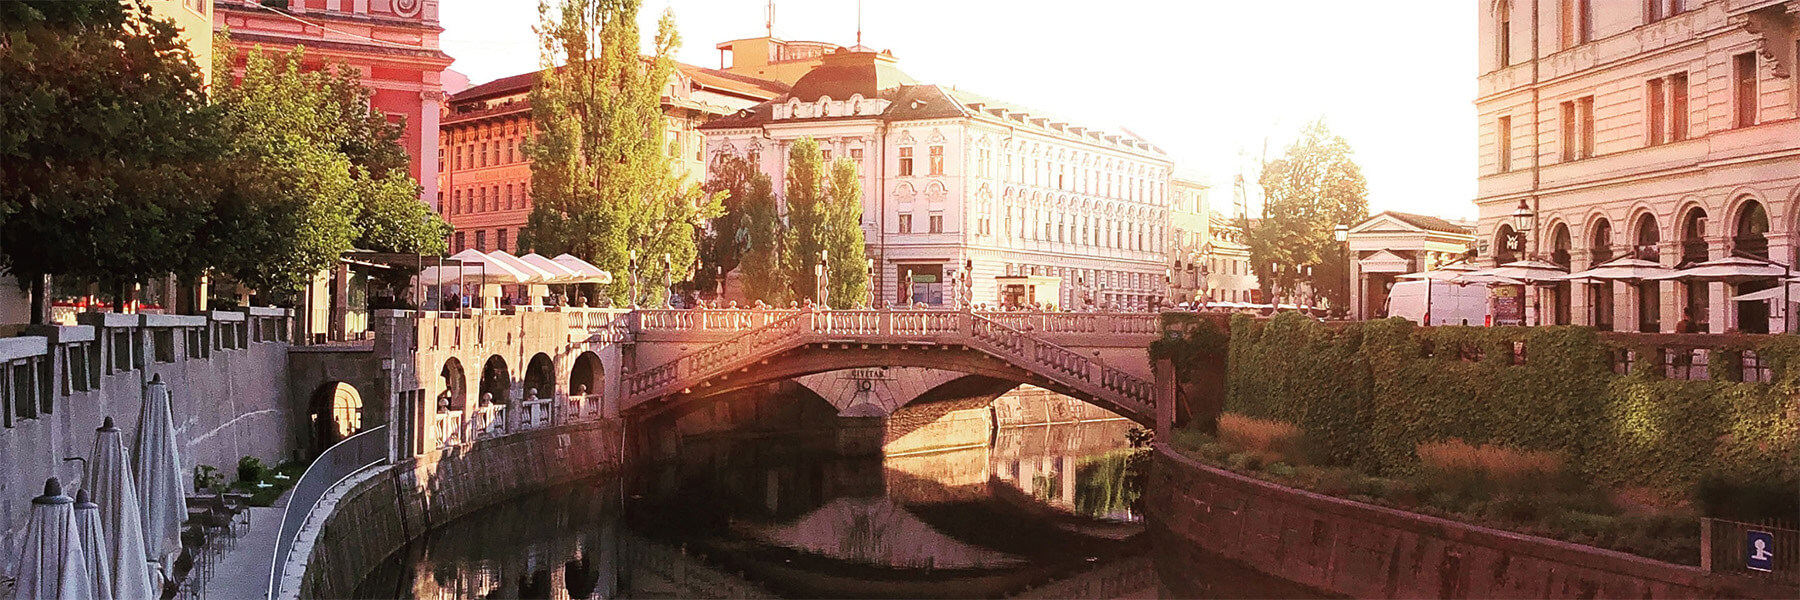 A bridge over a canal in a Croatian city.